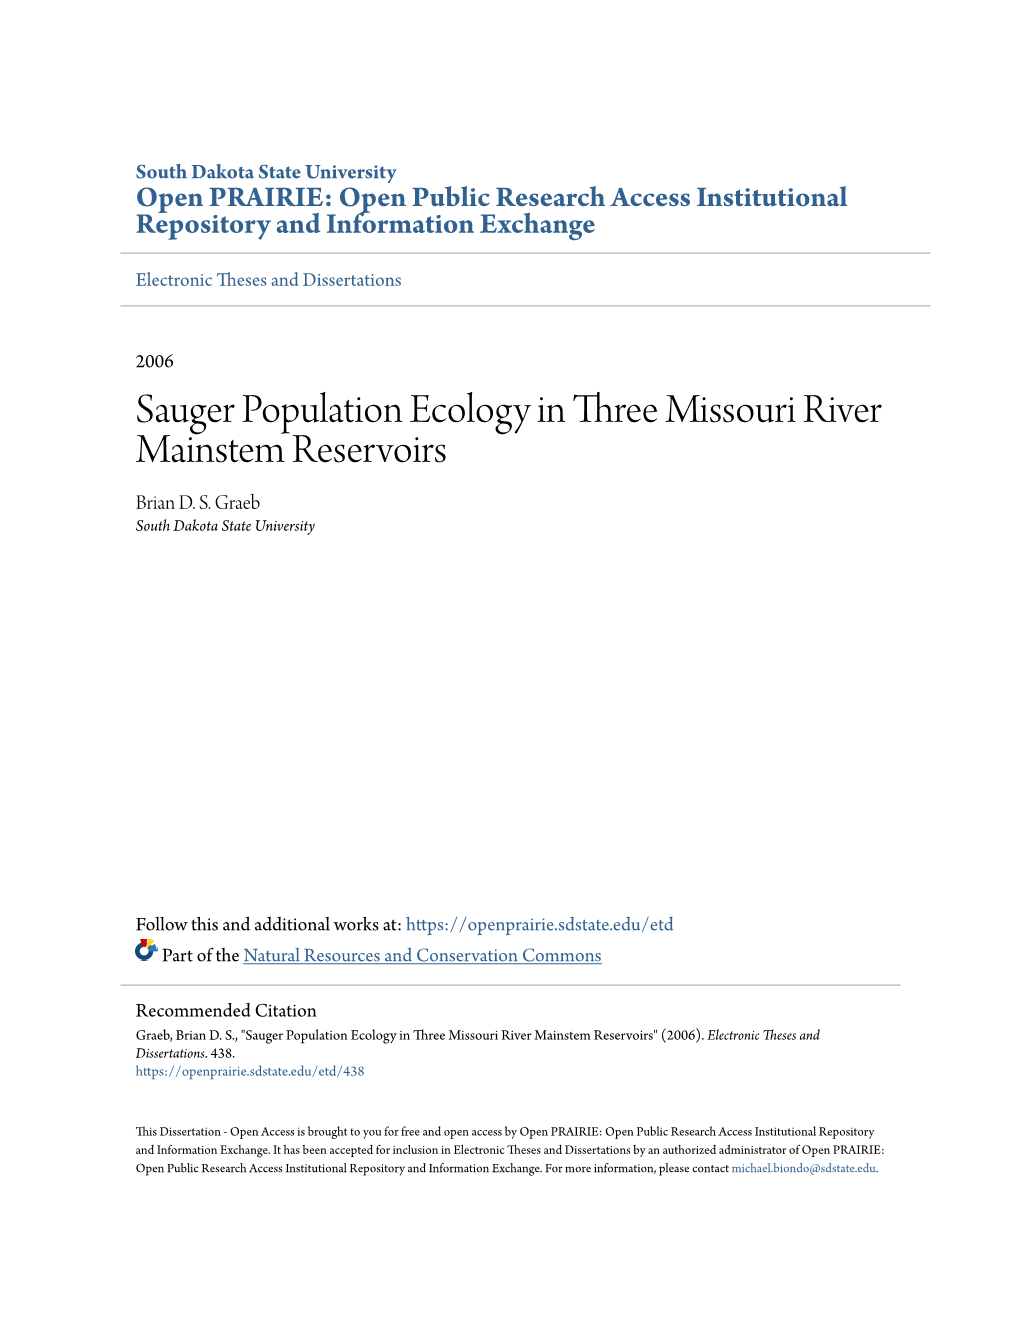 Sauger Population Ecology in Three Missouri River Mainstem Reservoirs Brian D